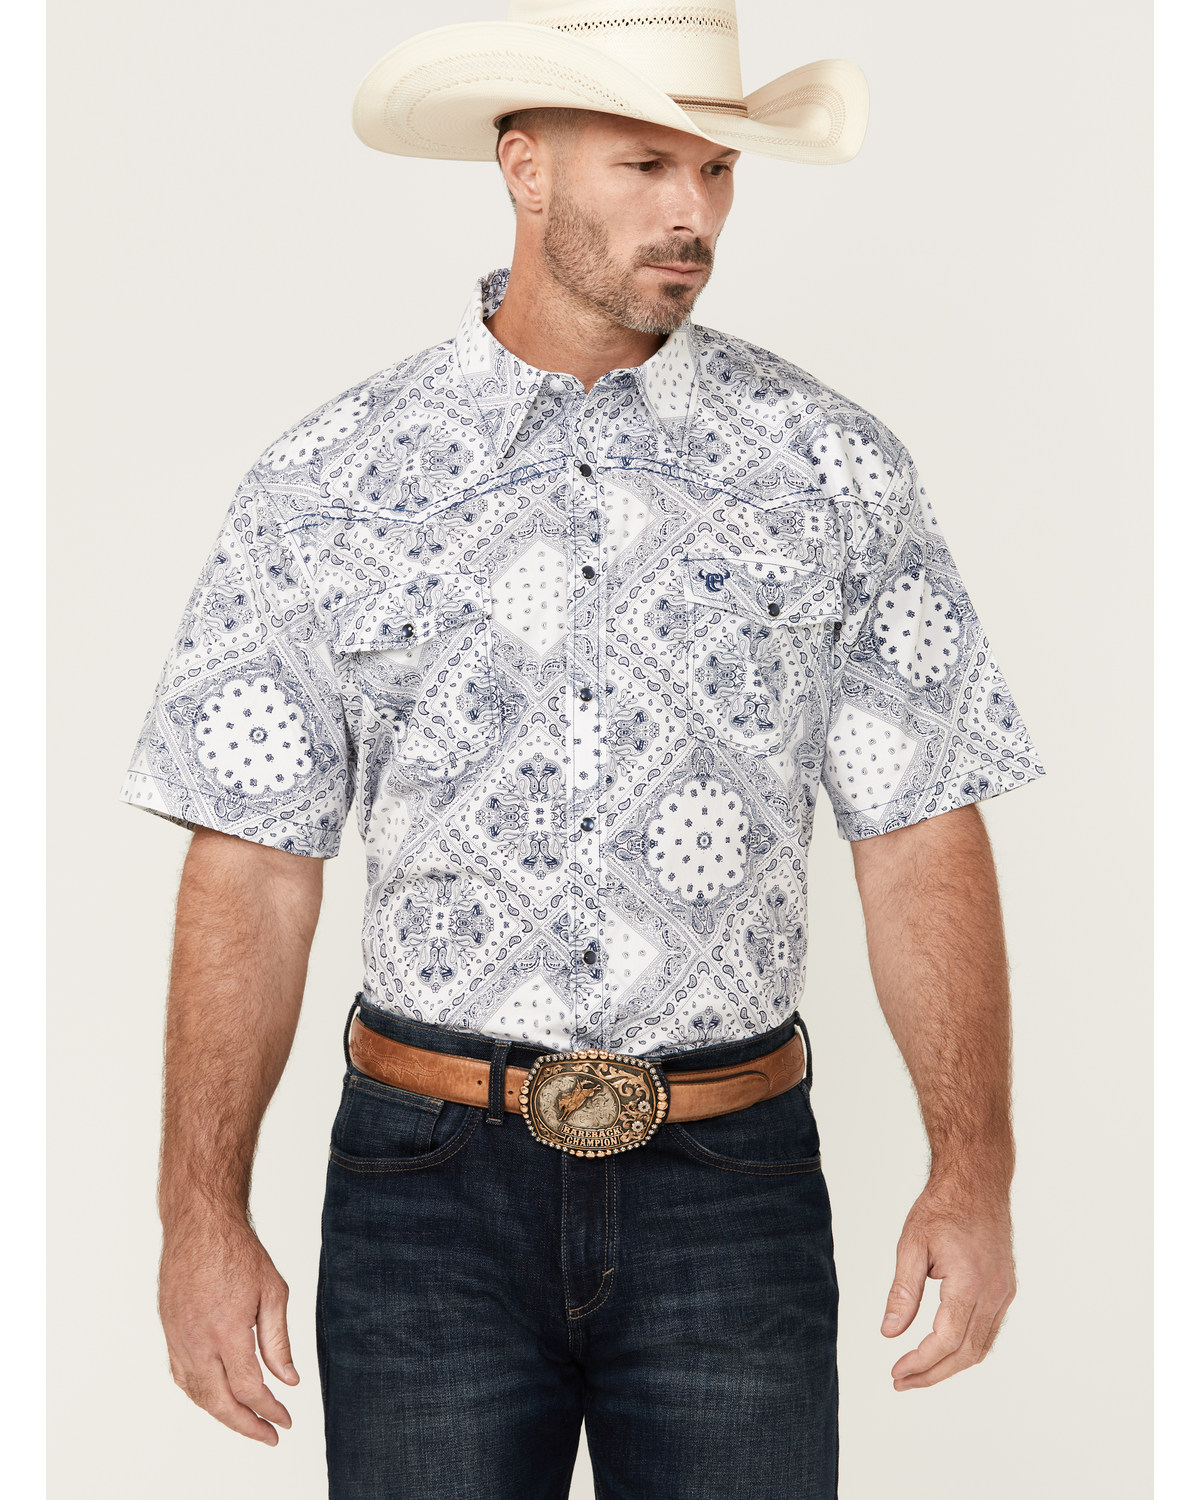 Cowboy Hardware Men's Boot Barn Exclusive Bandana Print Short Sleeve Snap Western Shirt